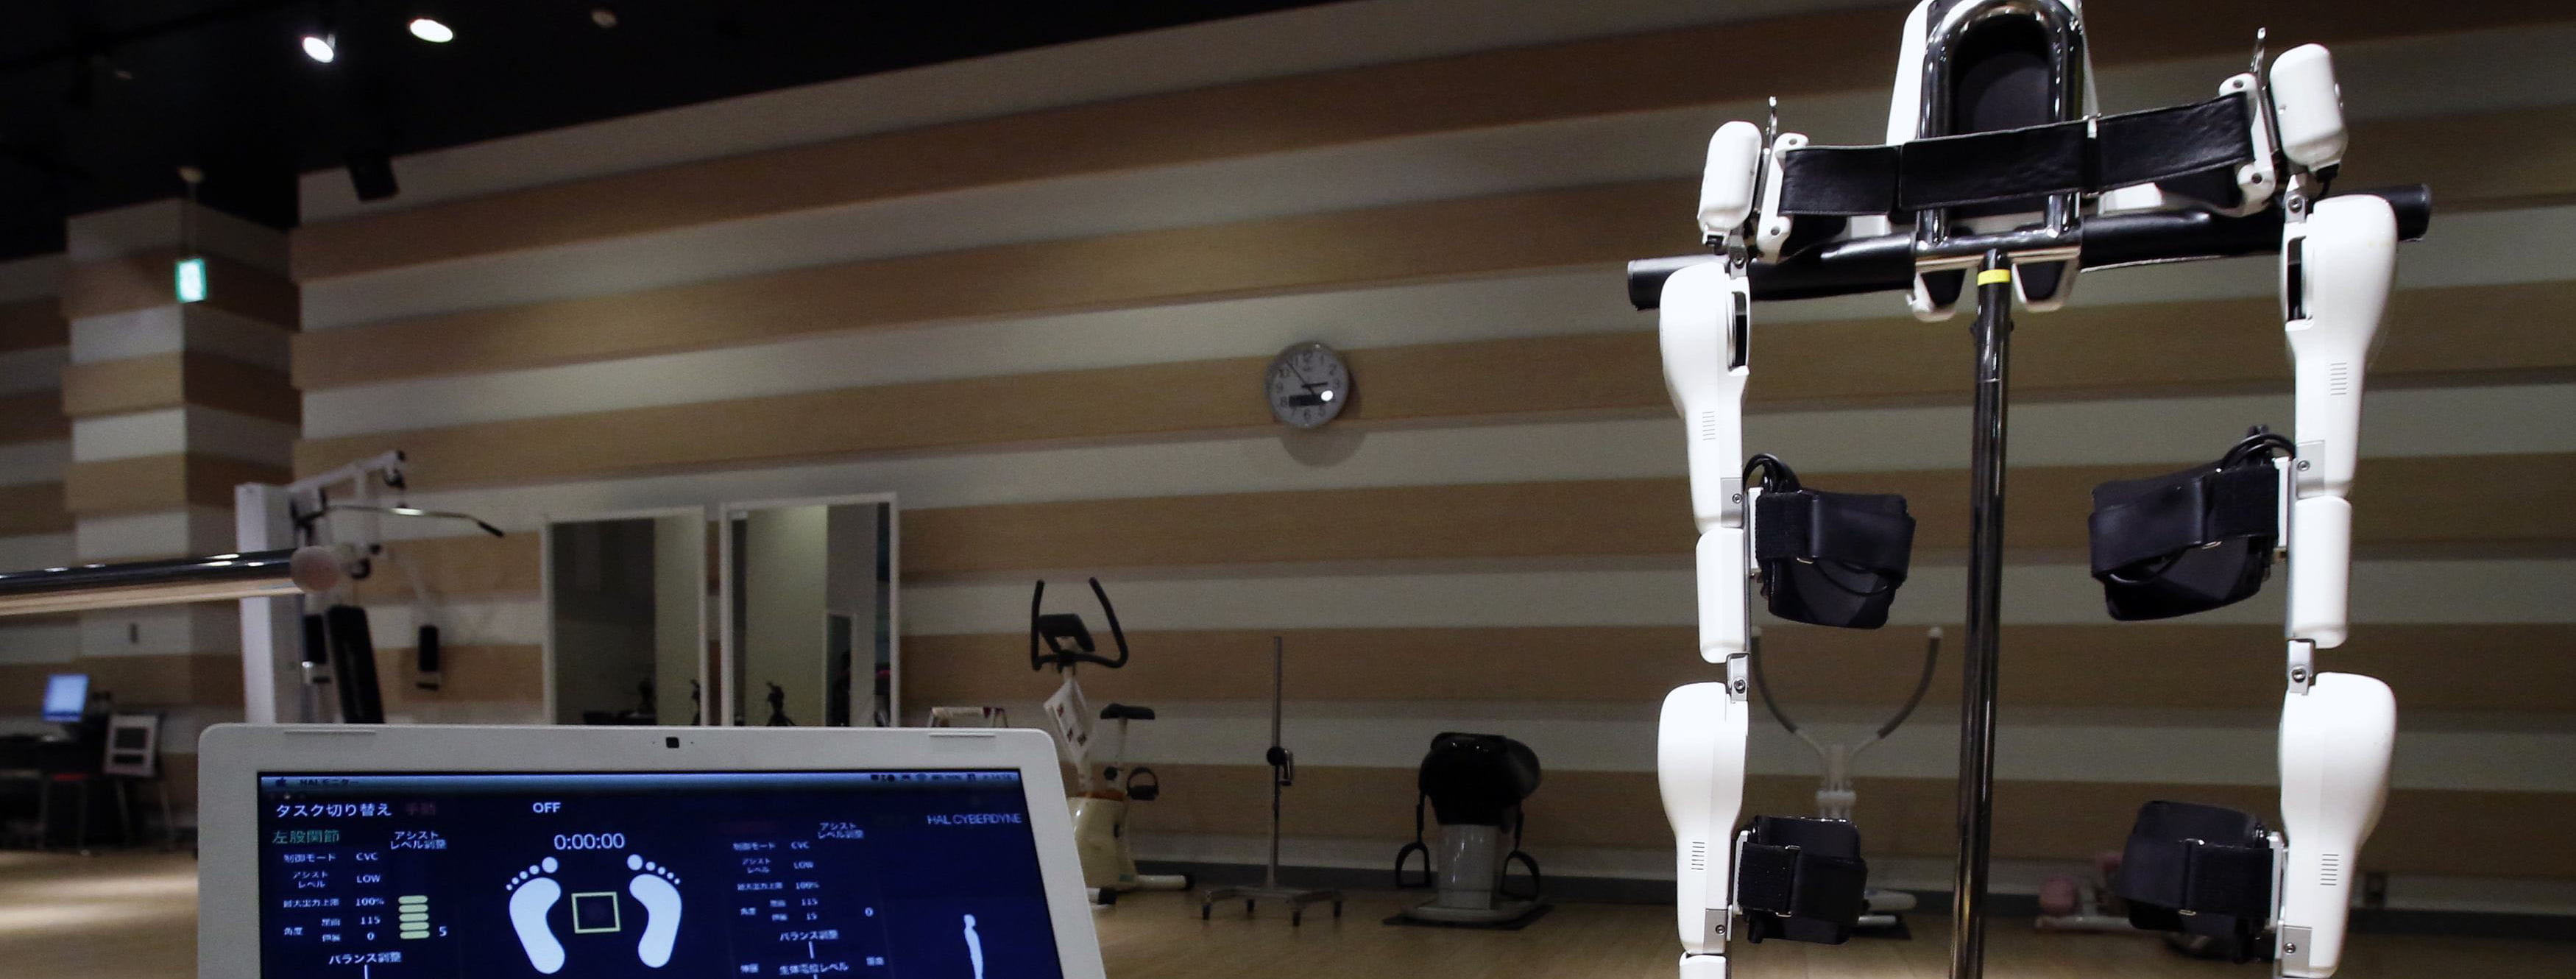 n robots a 201411222 e1417479983932 اليابان تسعى لاستعادة الريادة في مجال الروبوتات مجلة نقطة العلمية